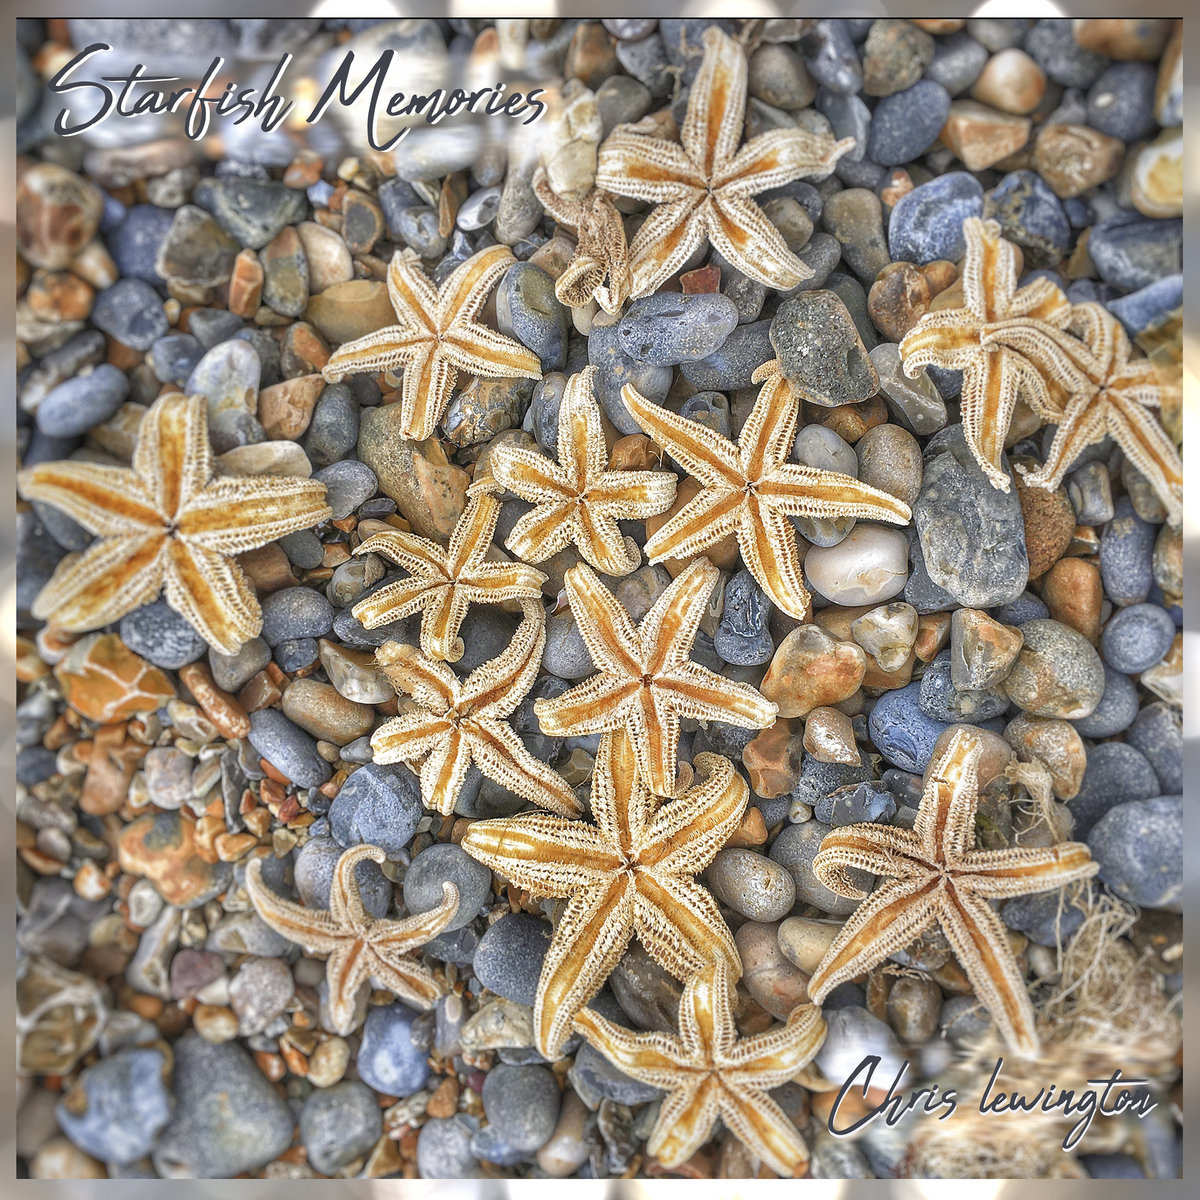 Chris Lewington - Starfish Memories